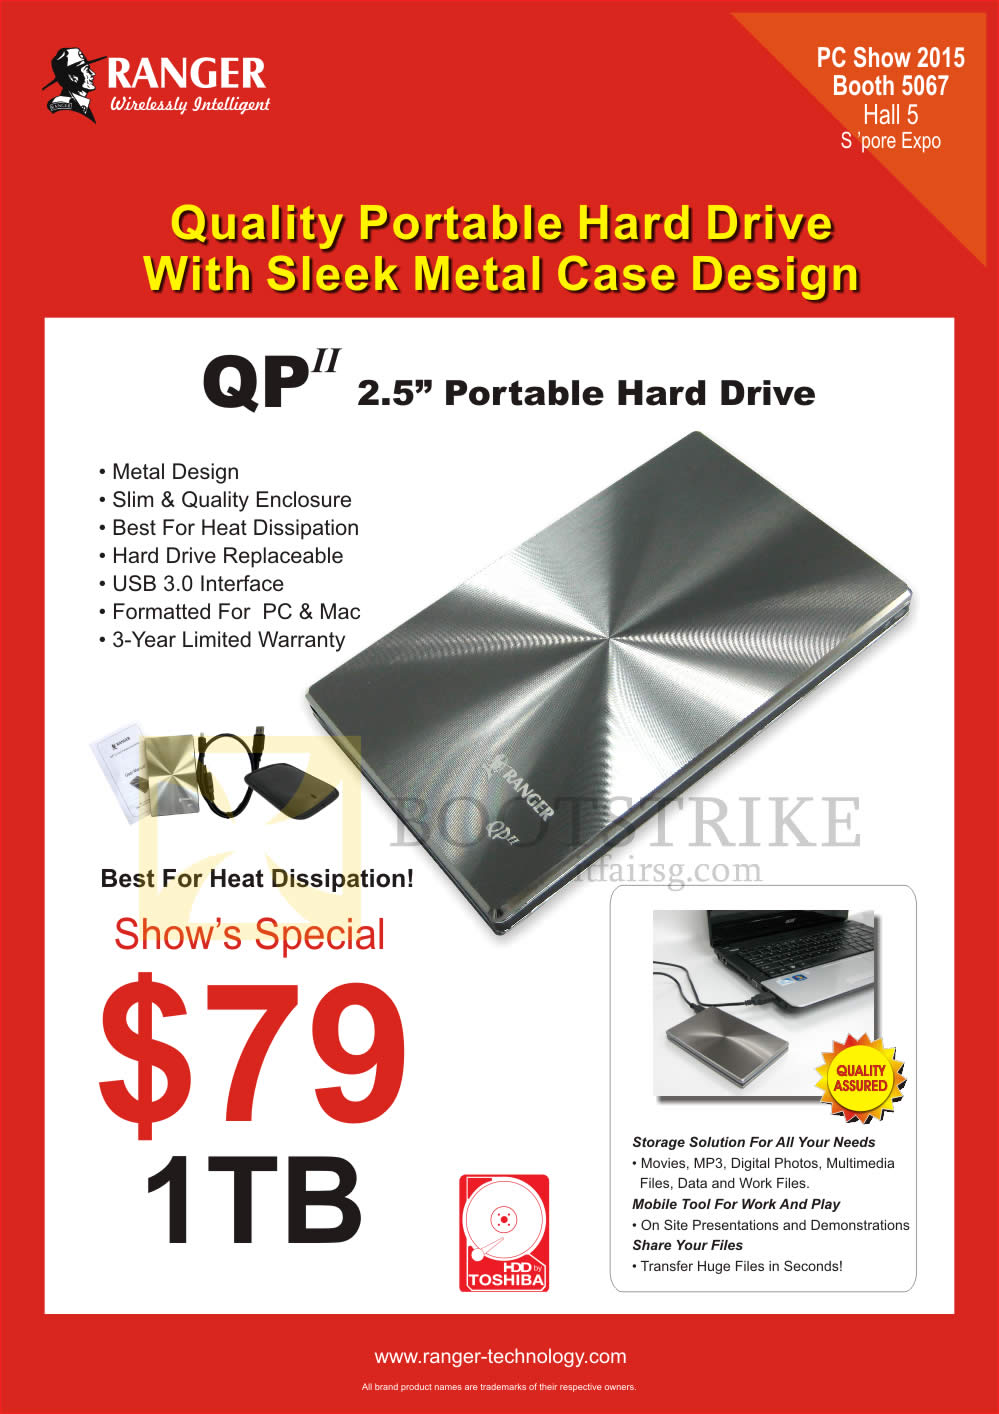 PC SHOW 2015 price list image brochure of Ranger QP II External Storage Drive 1TB